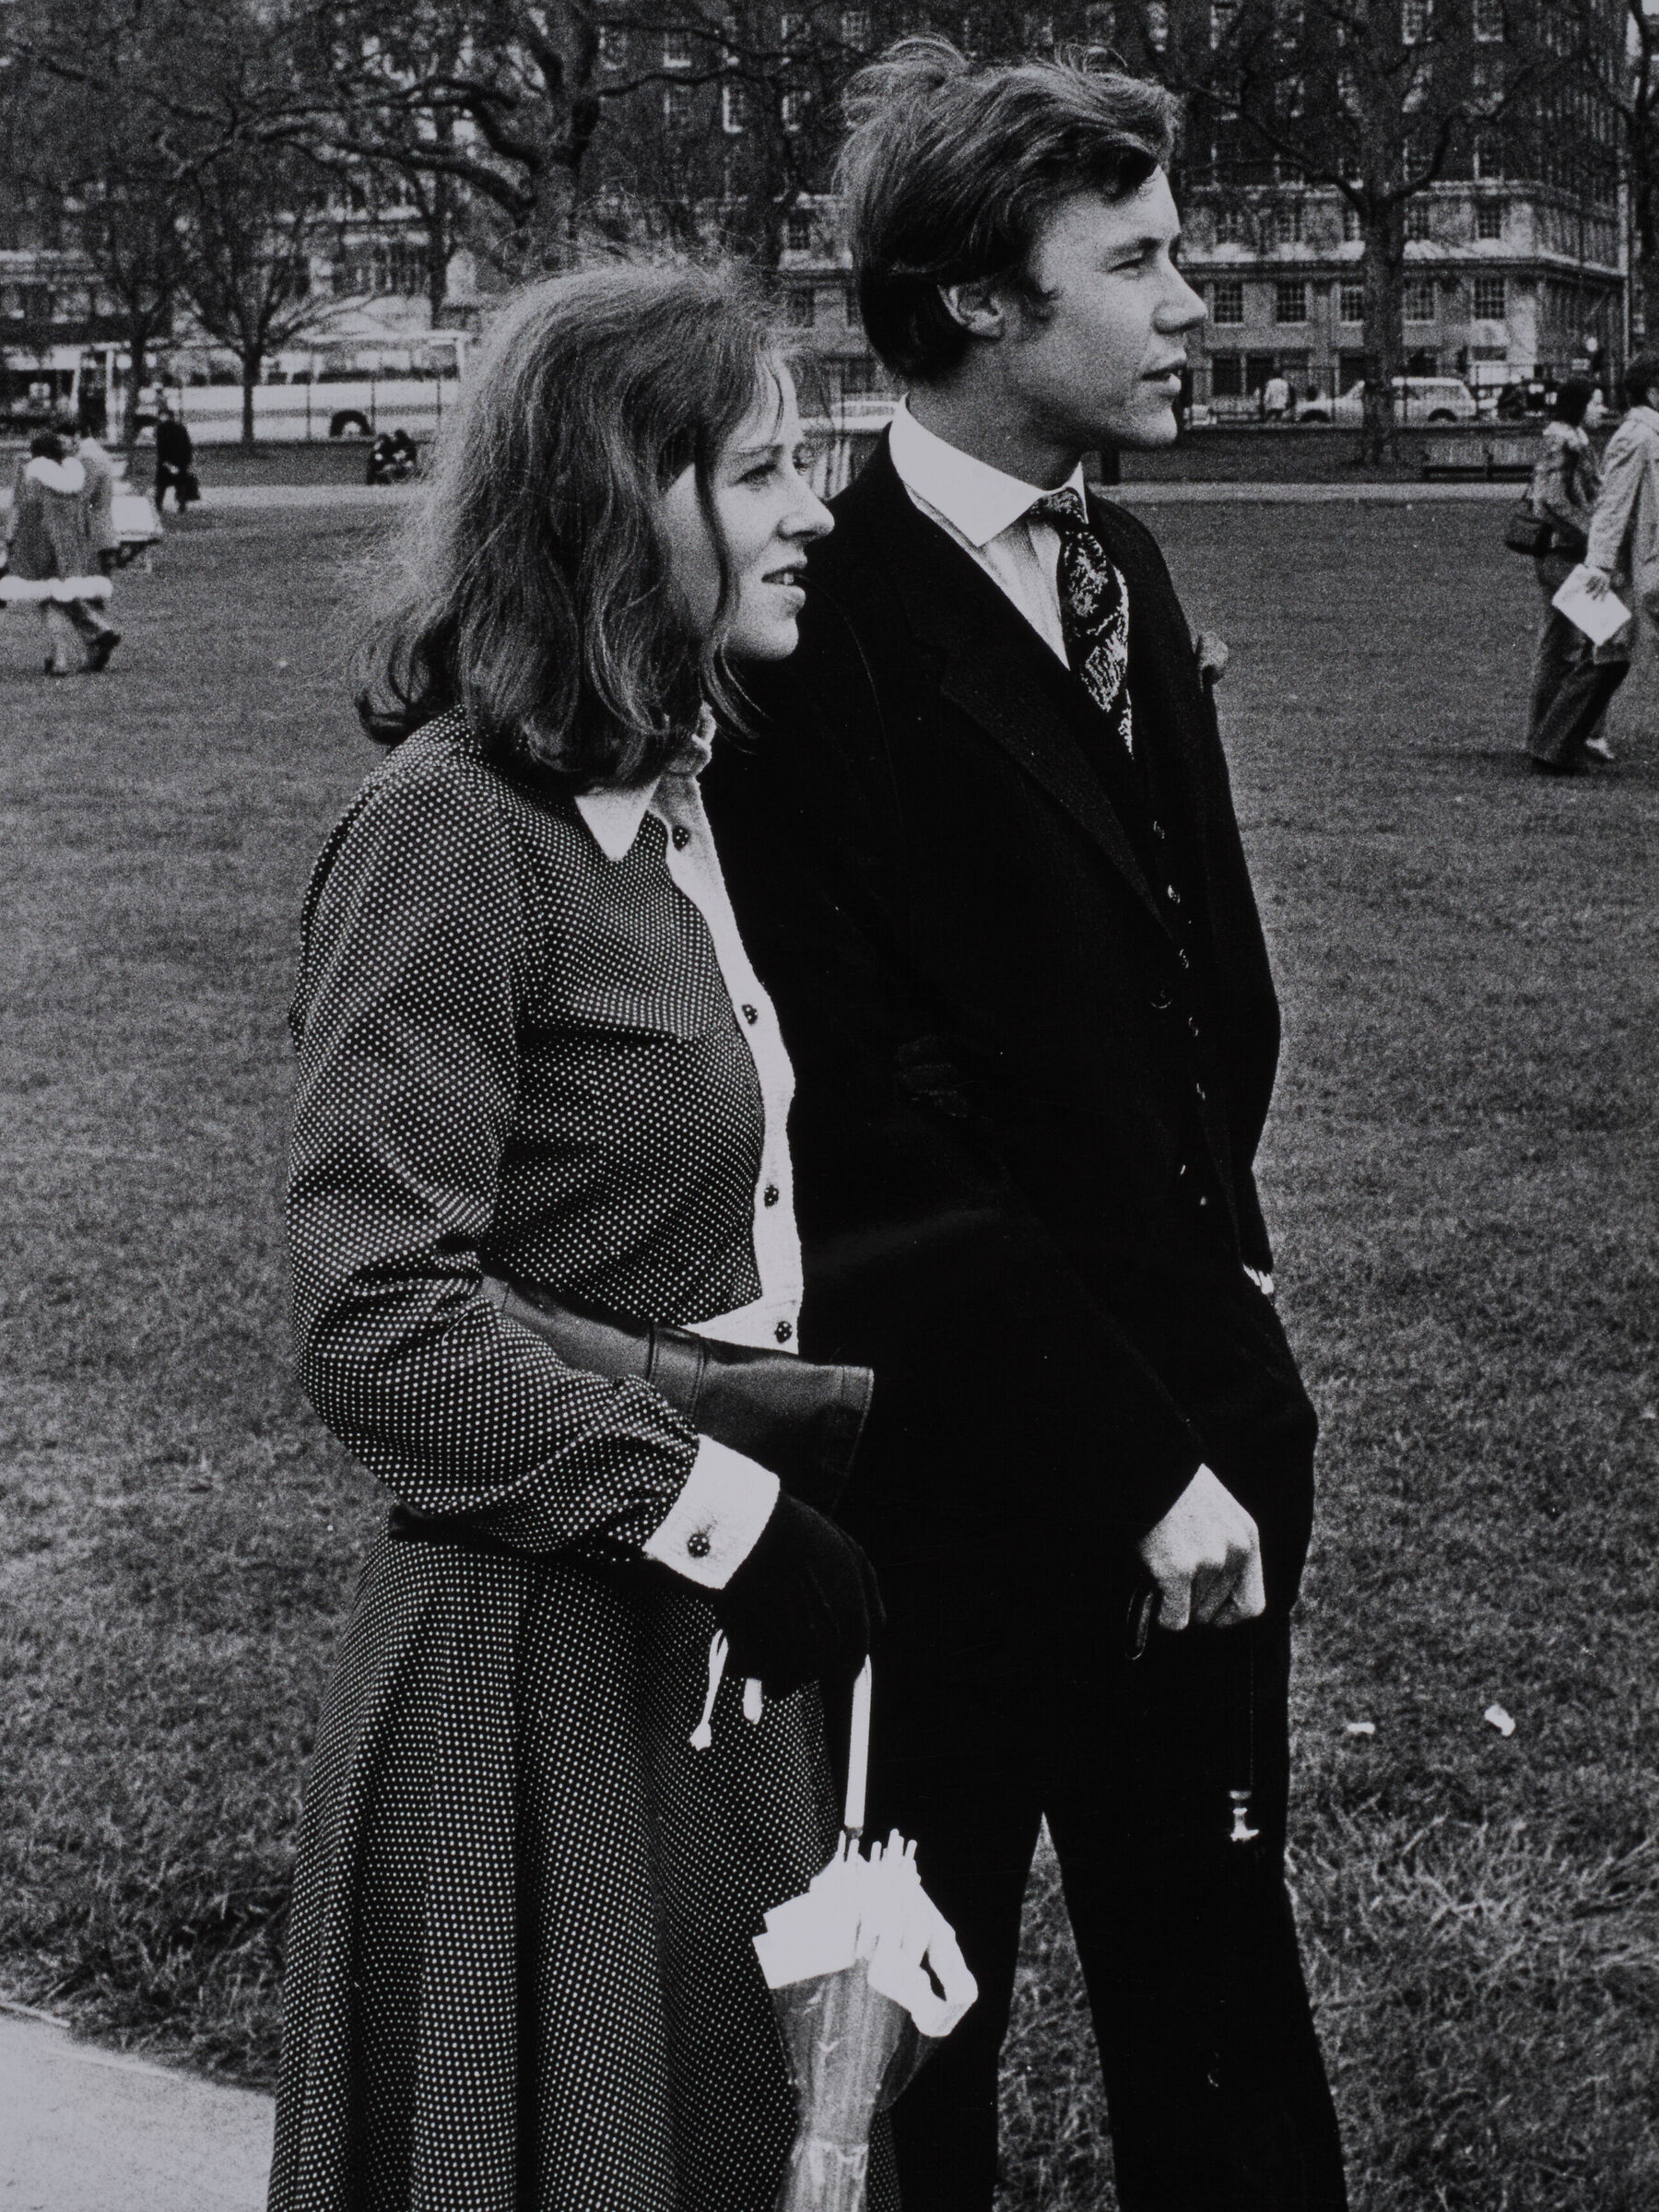 WITH WEEKEND SCHOOL IN LONDON IN '69...